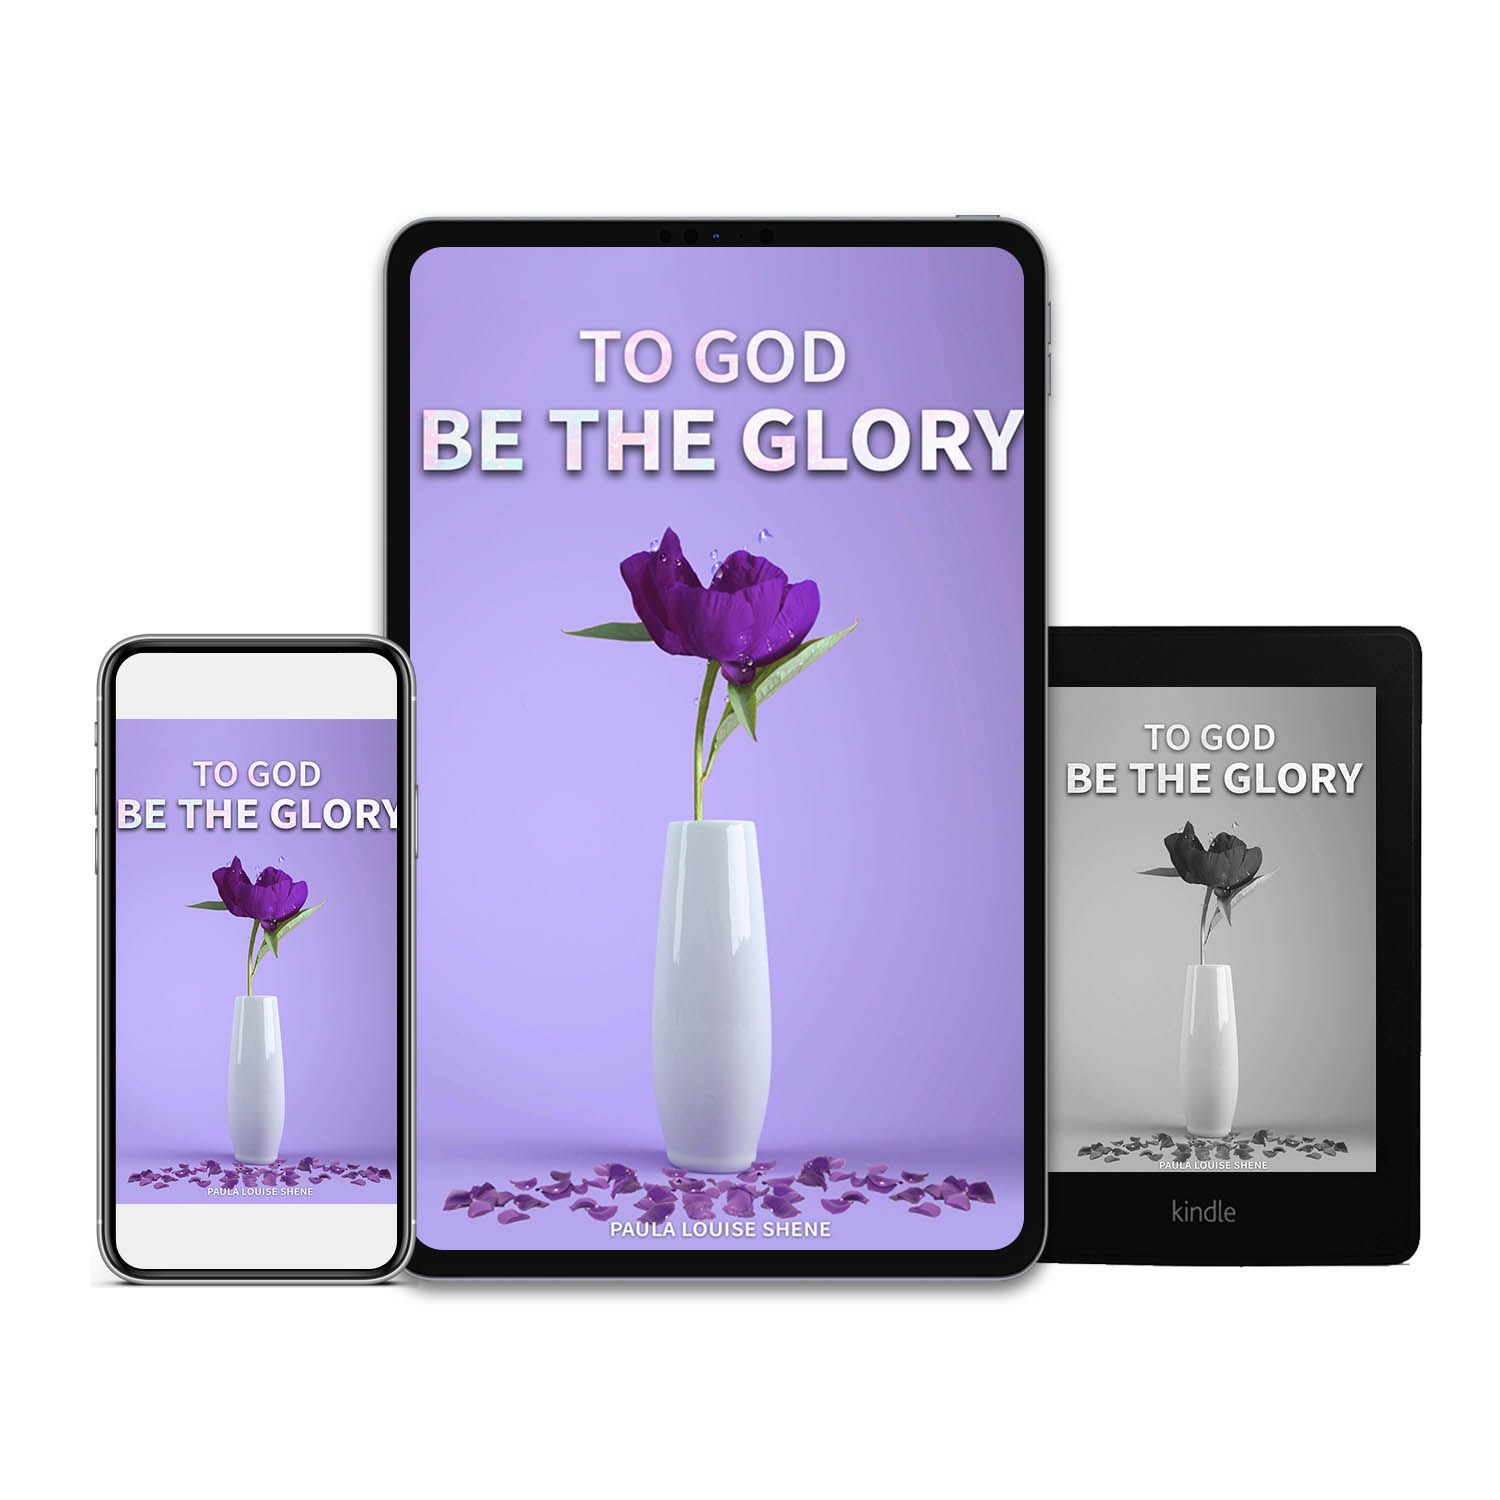 bookconsilio-portfolio-To-god-be-the-glory-ebookcoverdesign-